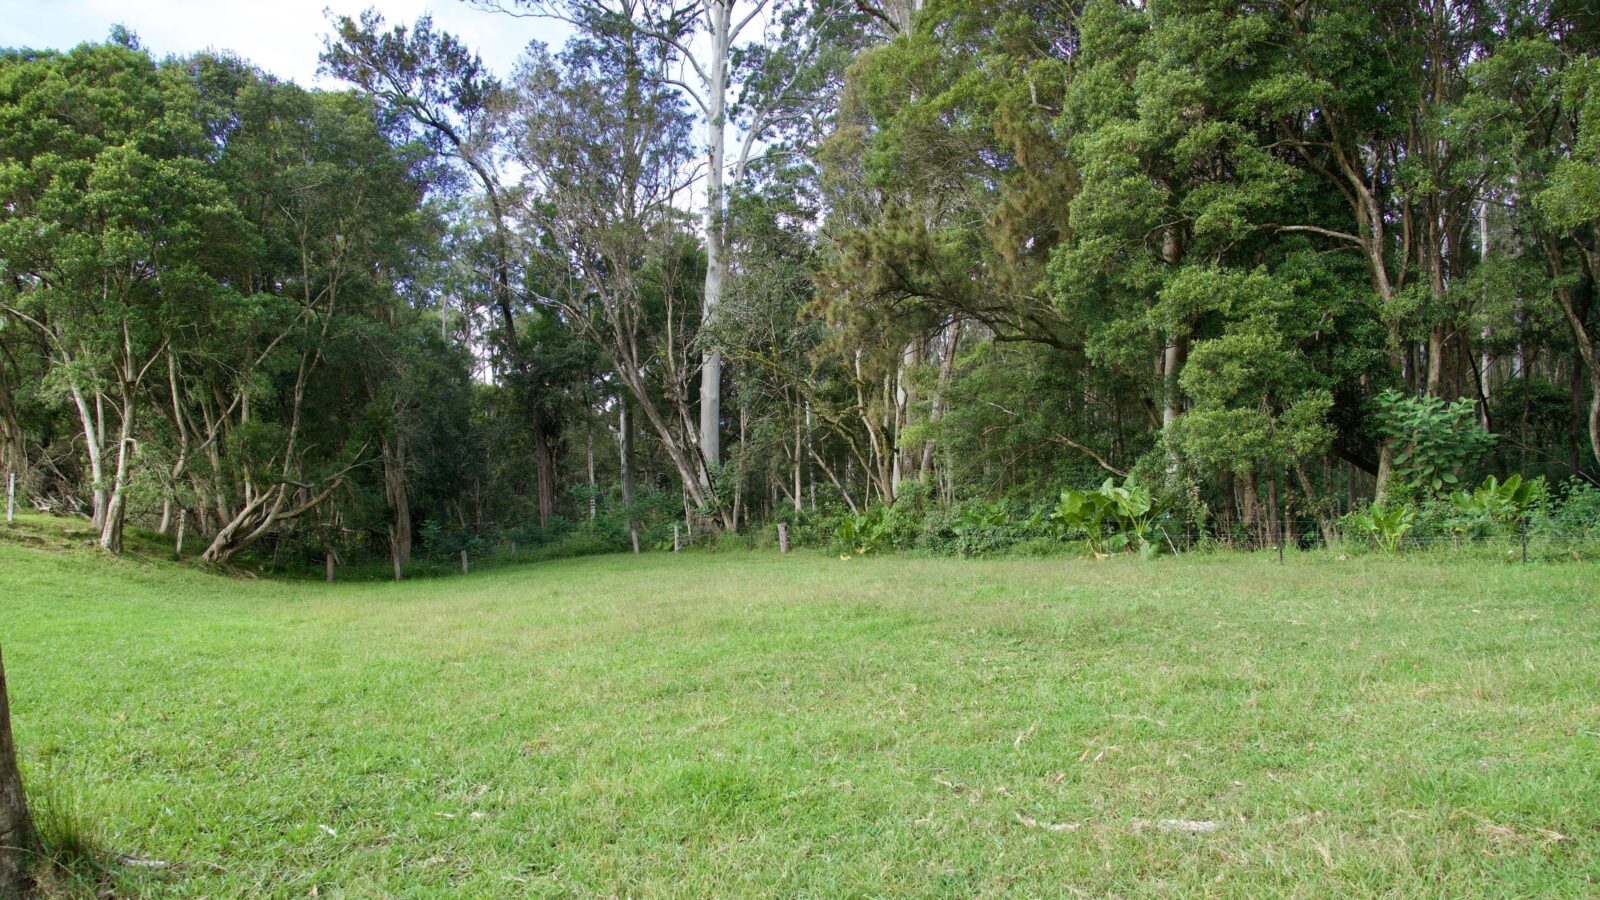 Lower area of grass area